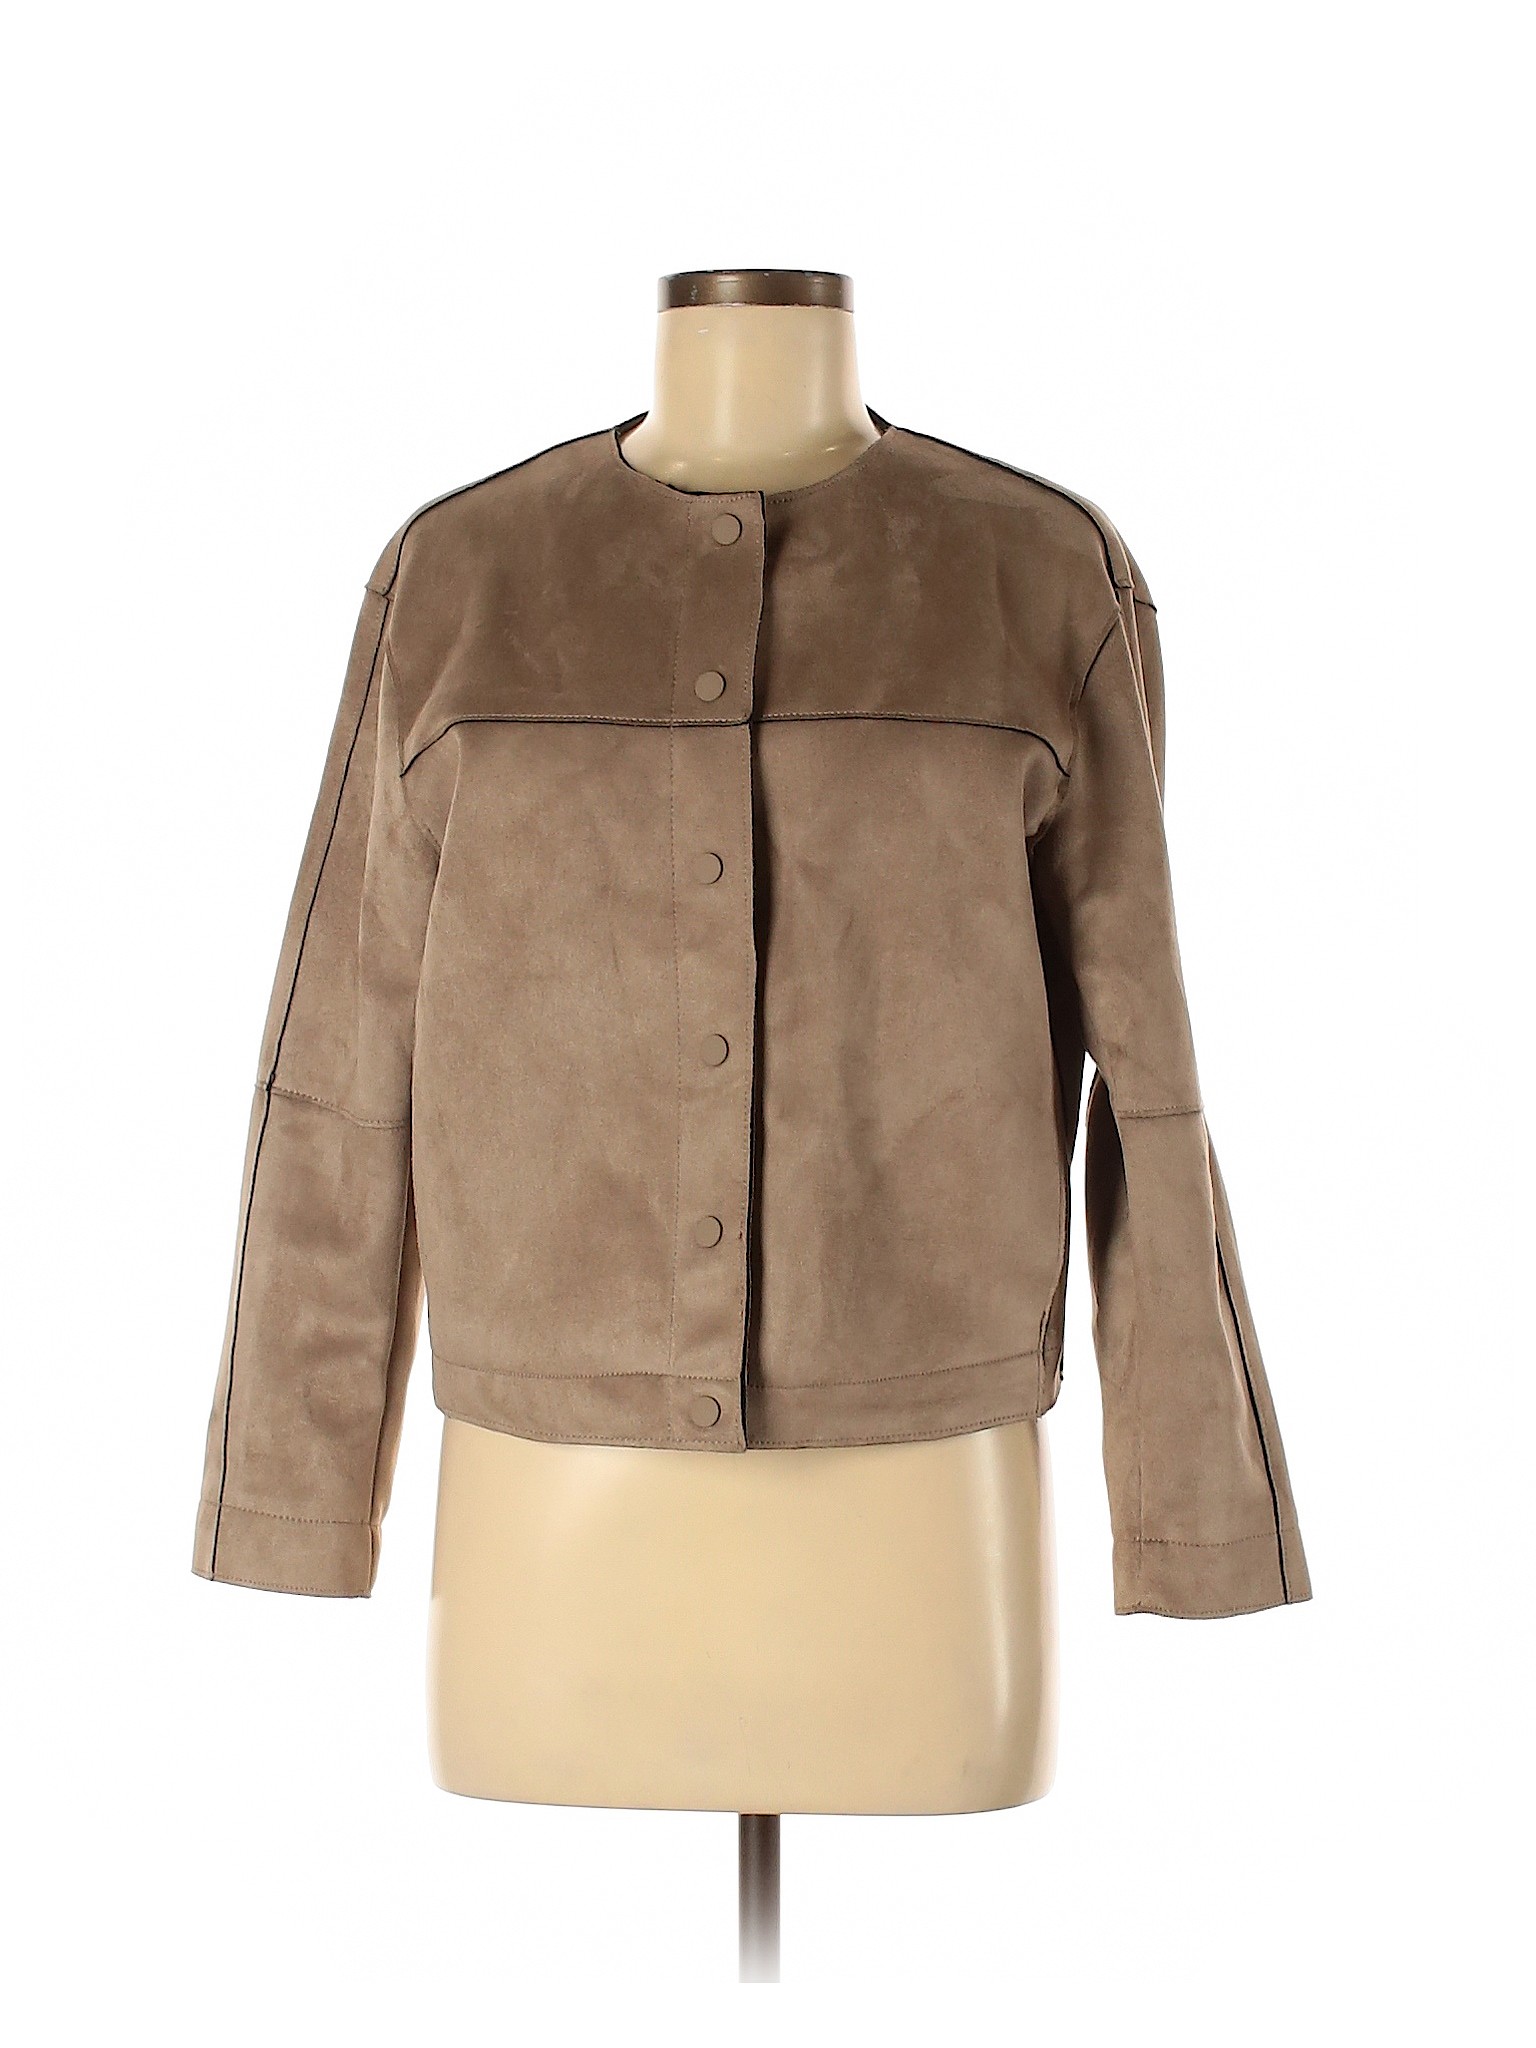 Zara Basic Women Brown Faux Leather Jacket M | eBay